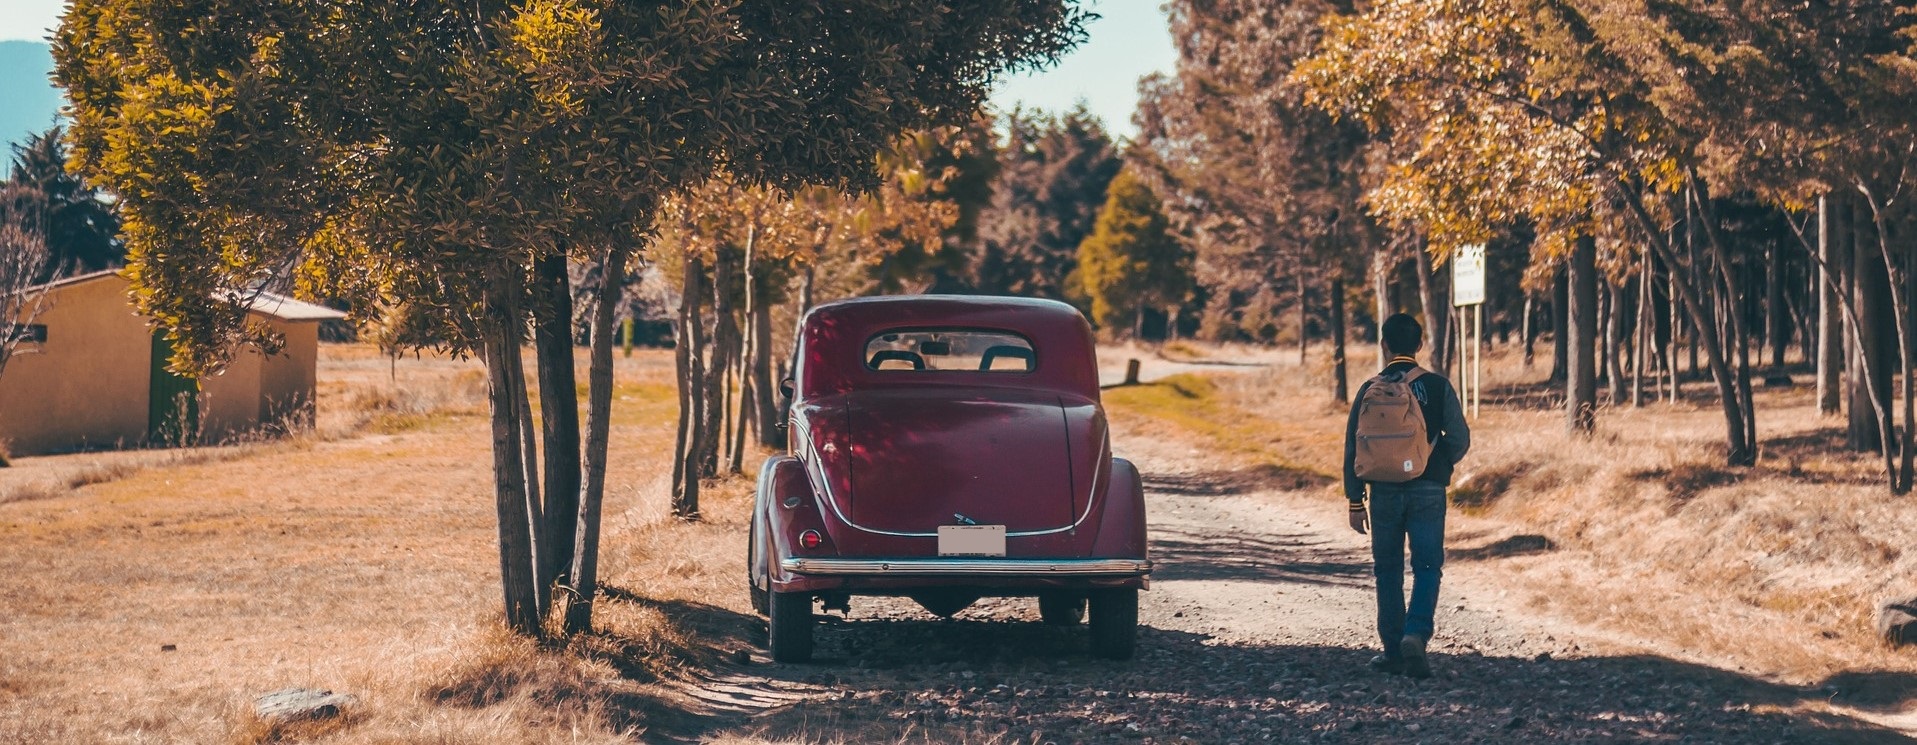 Oldtimer Beetle in Fresno, California | Kids Car Donations